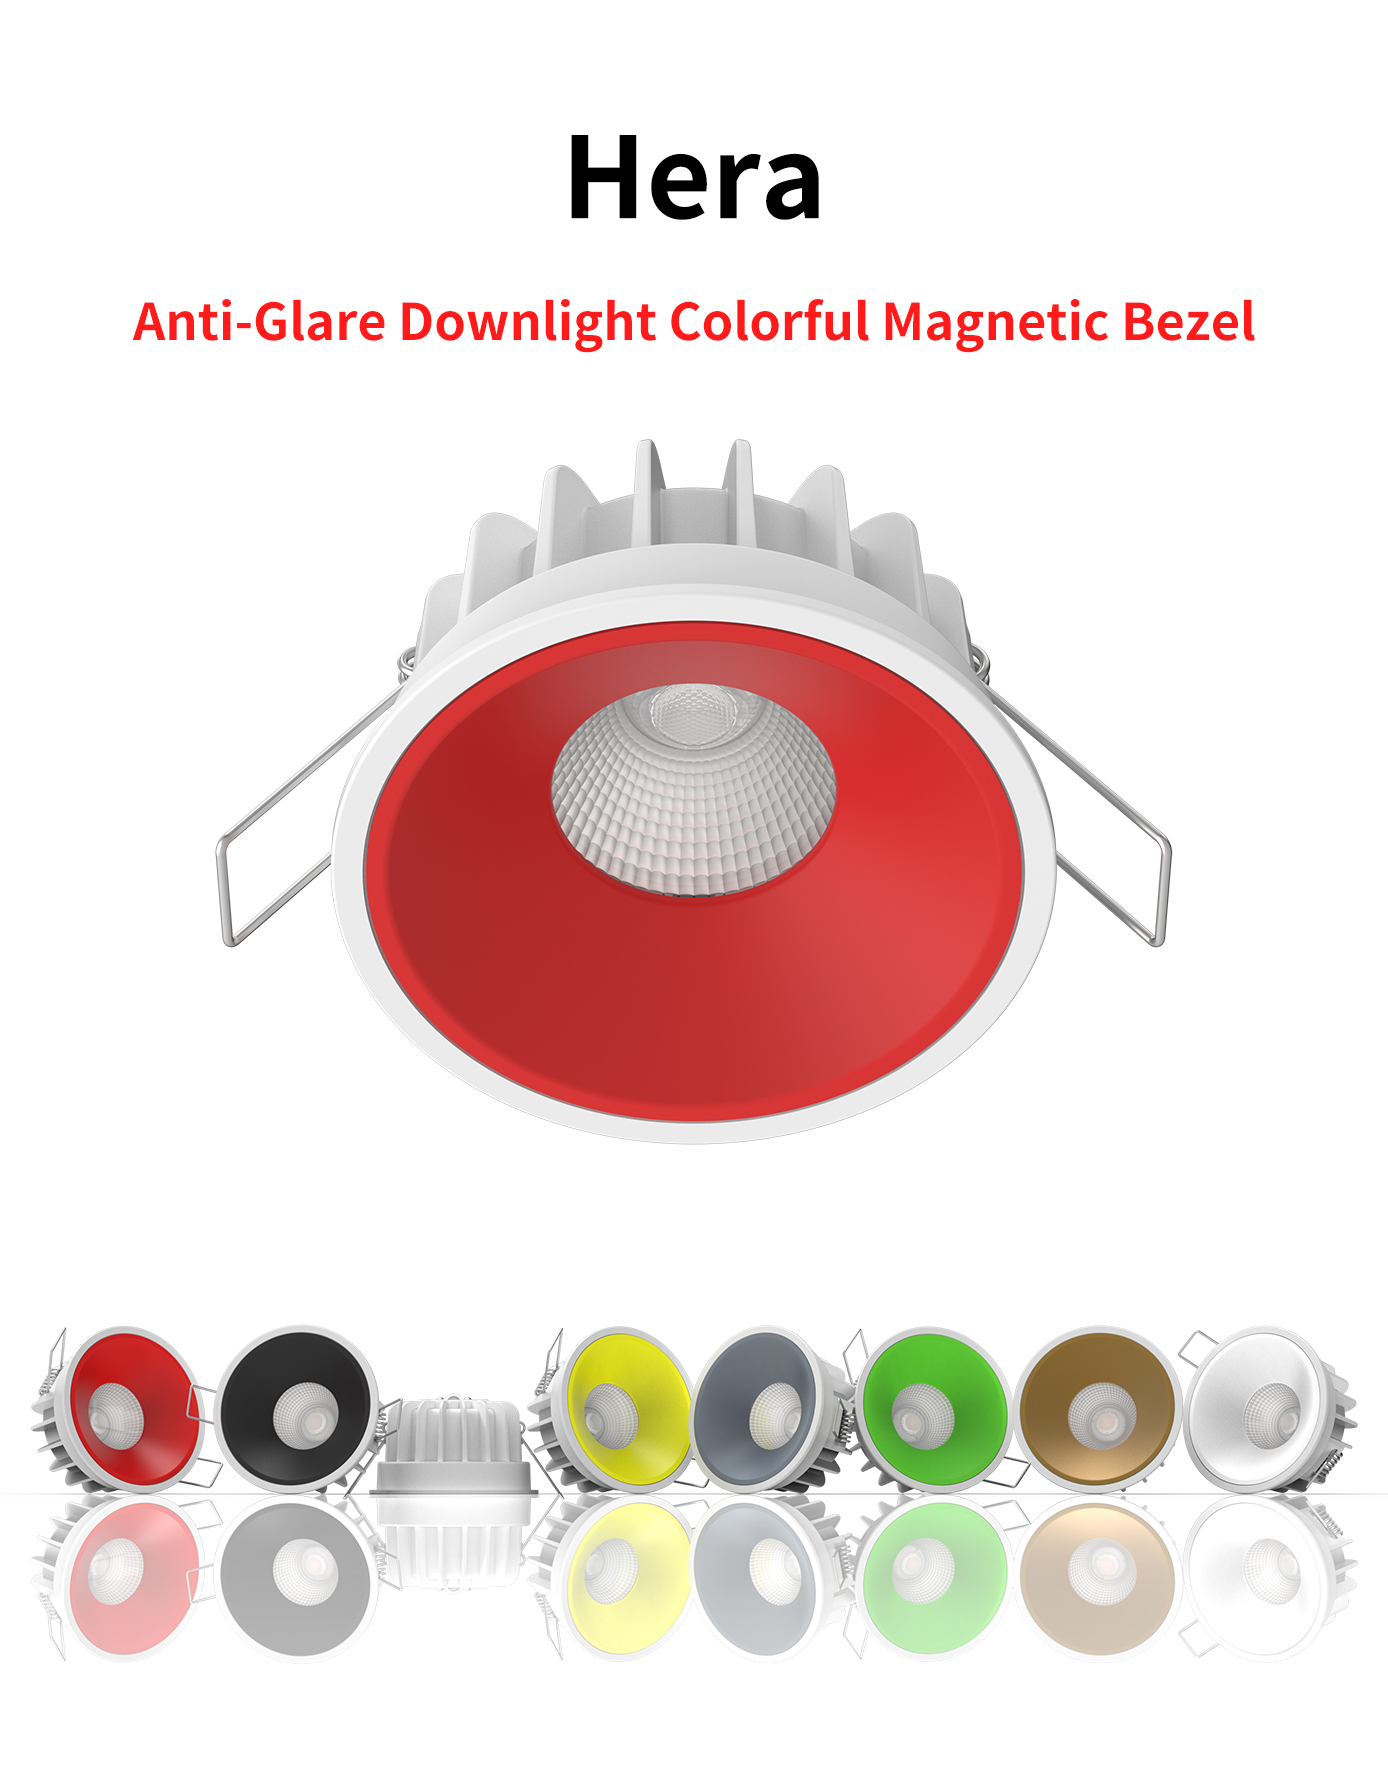 Hera 8W Anti-Glare LED Downlight գունավոր մագնիսական շրջանակով